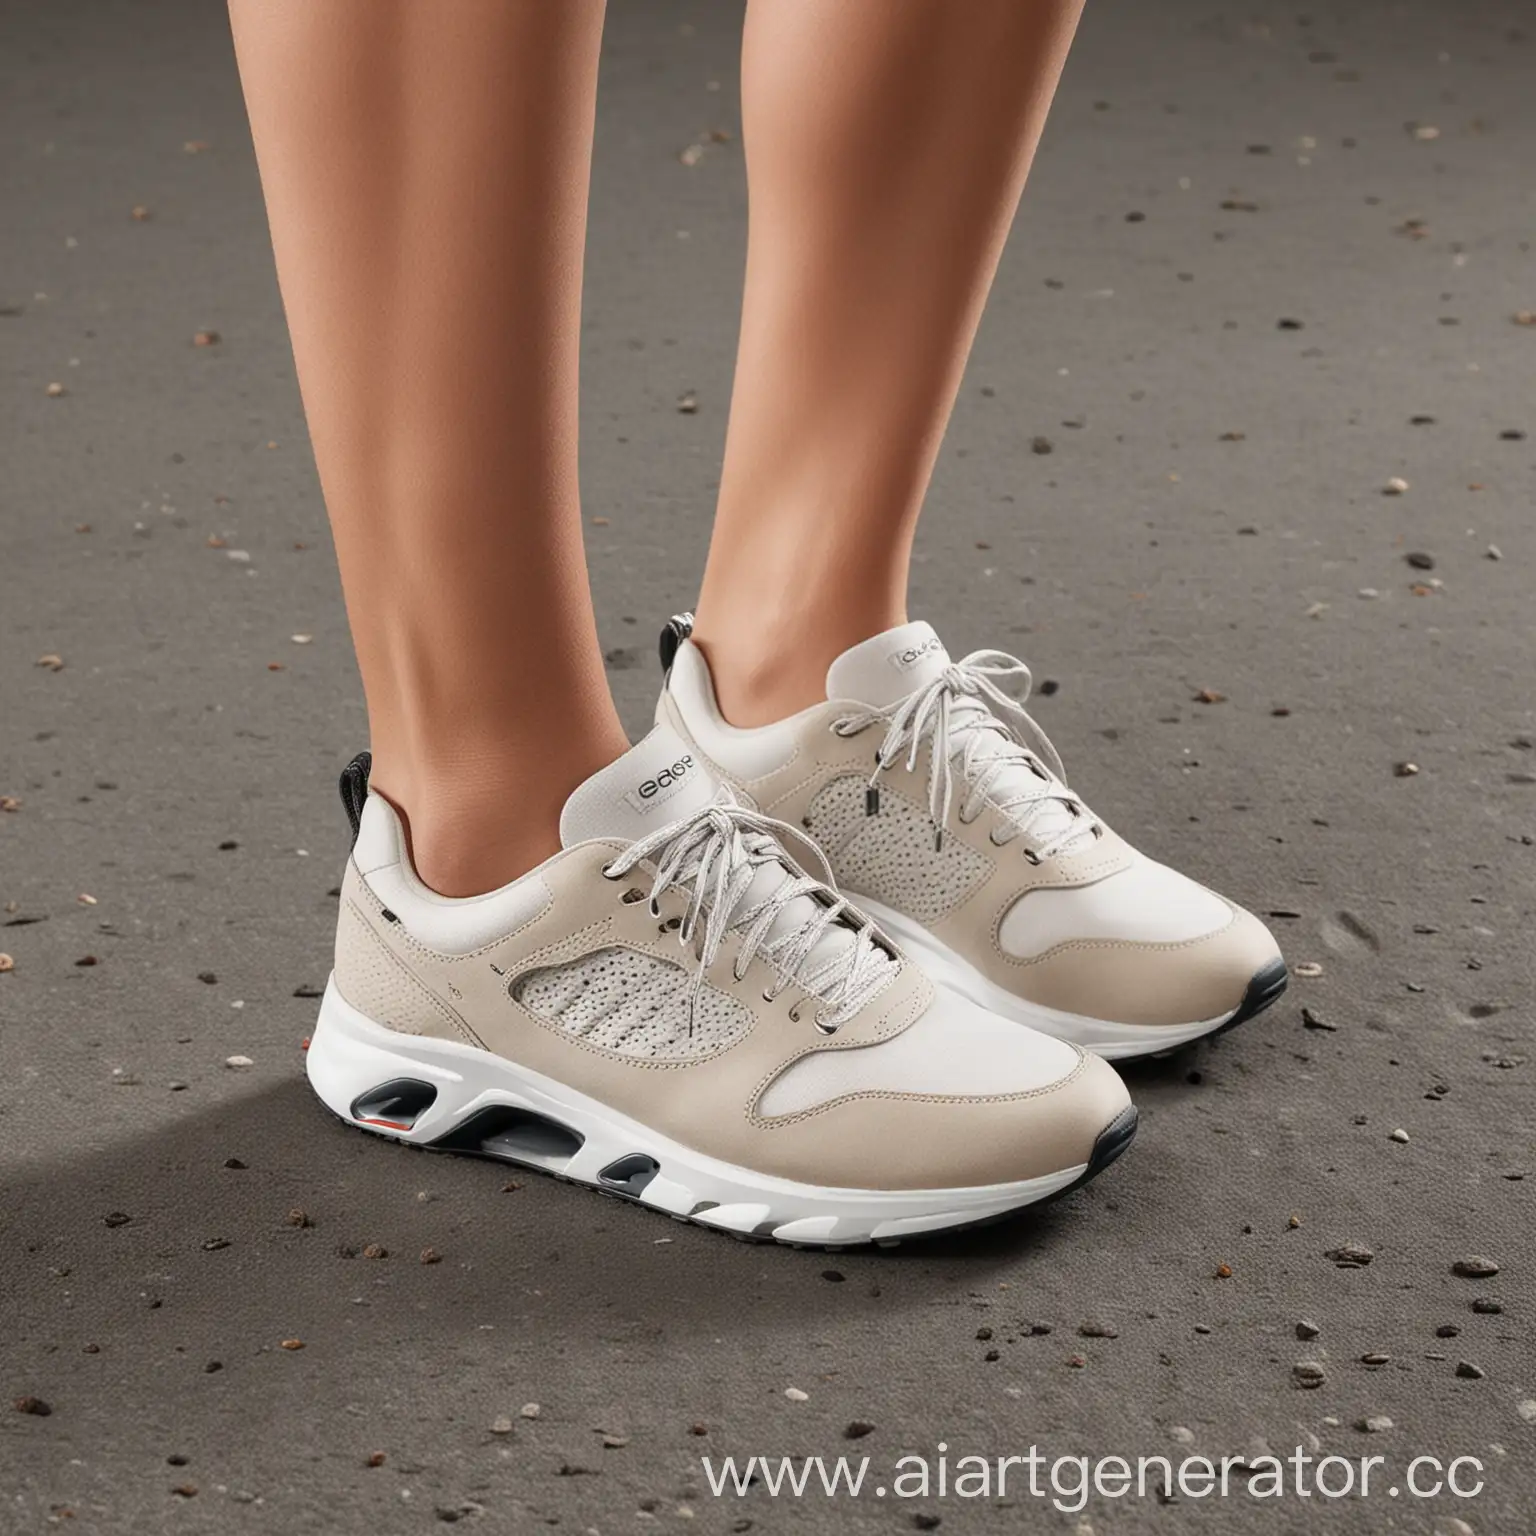 GEOX-Smart-Comfort-Shoes-Innovative-Technology-Ecofriendly-Design